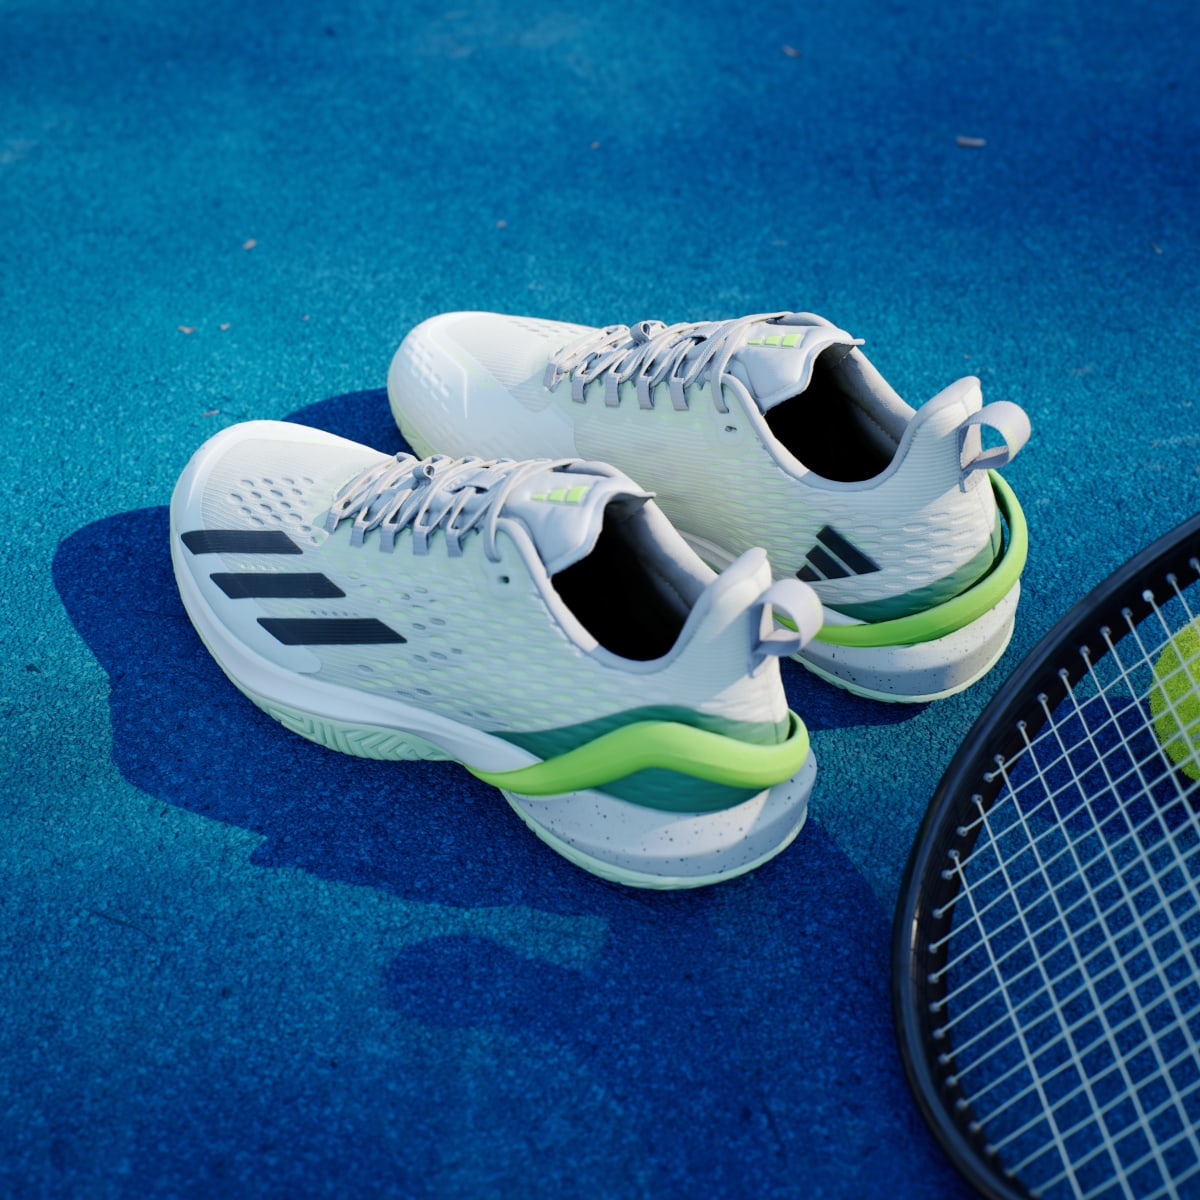 Adidas adizero Cybersonic Tenis Ayakkabısı. 6